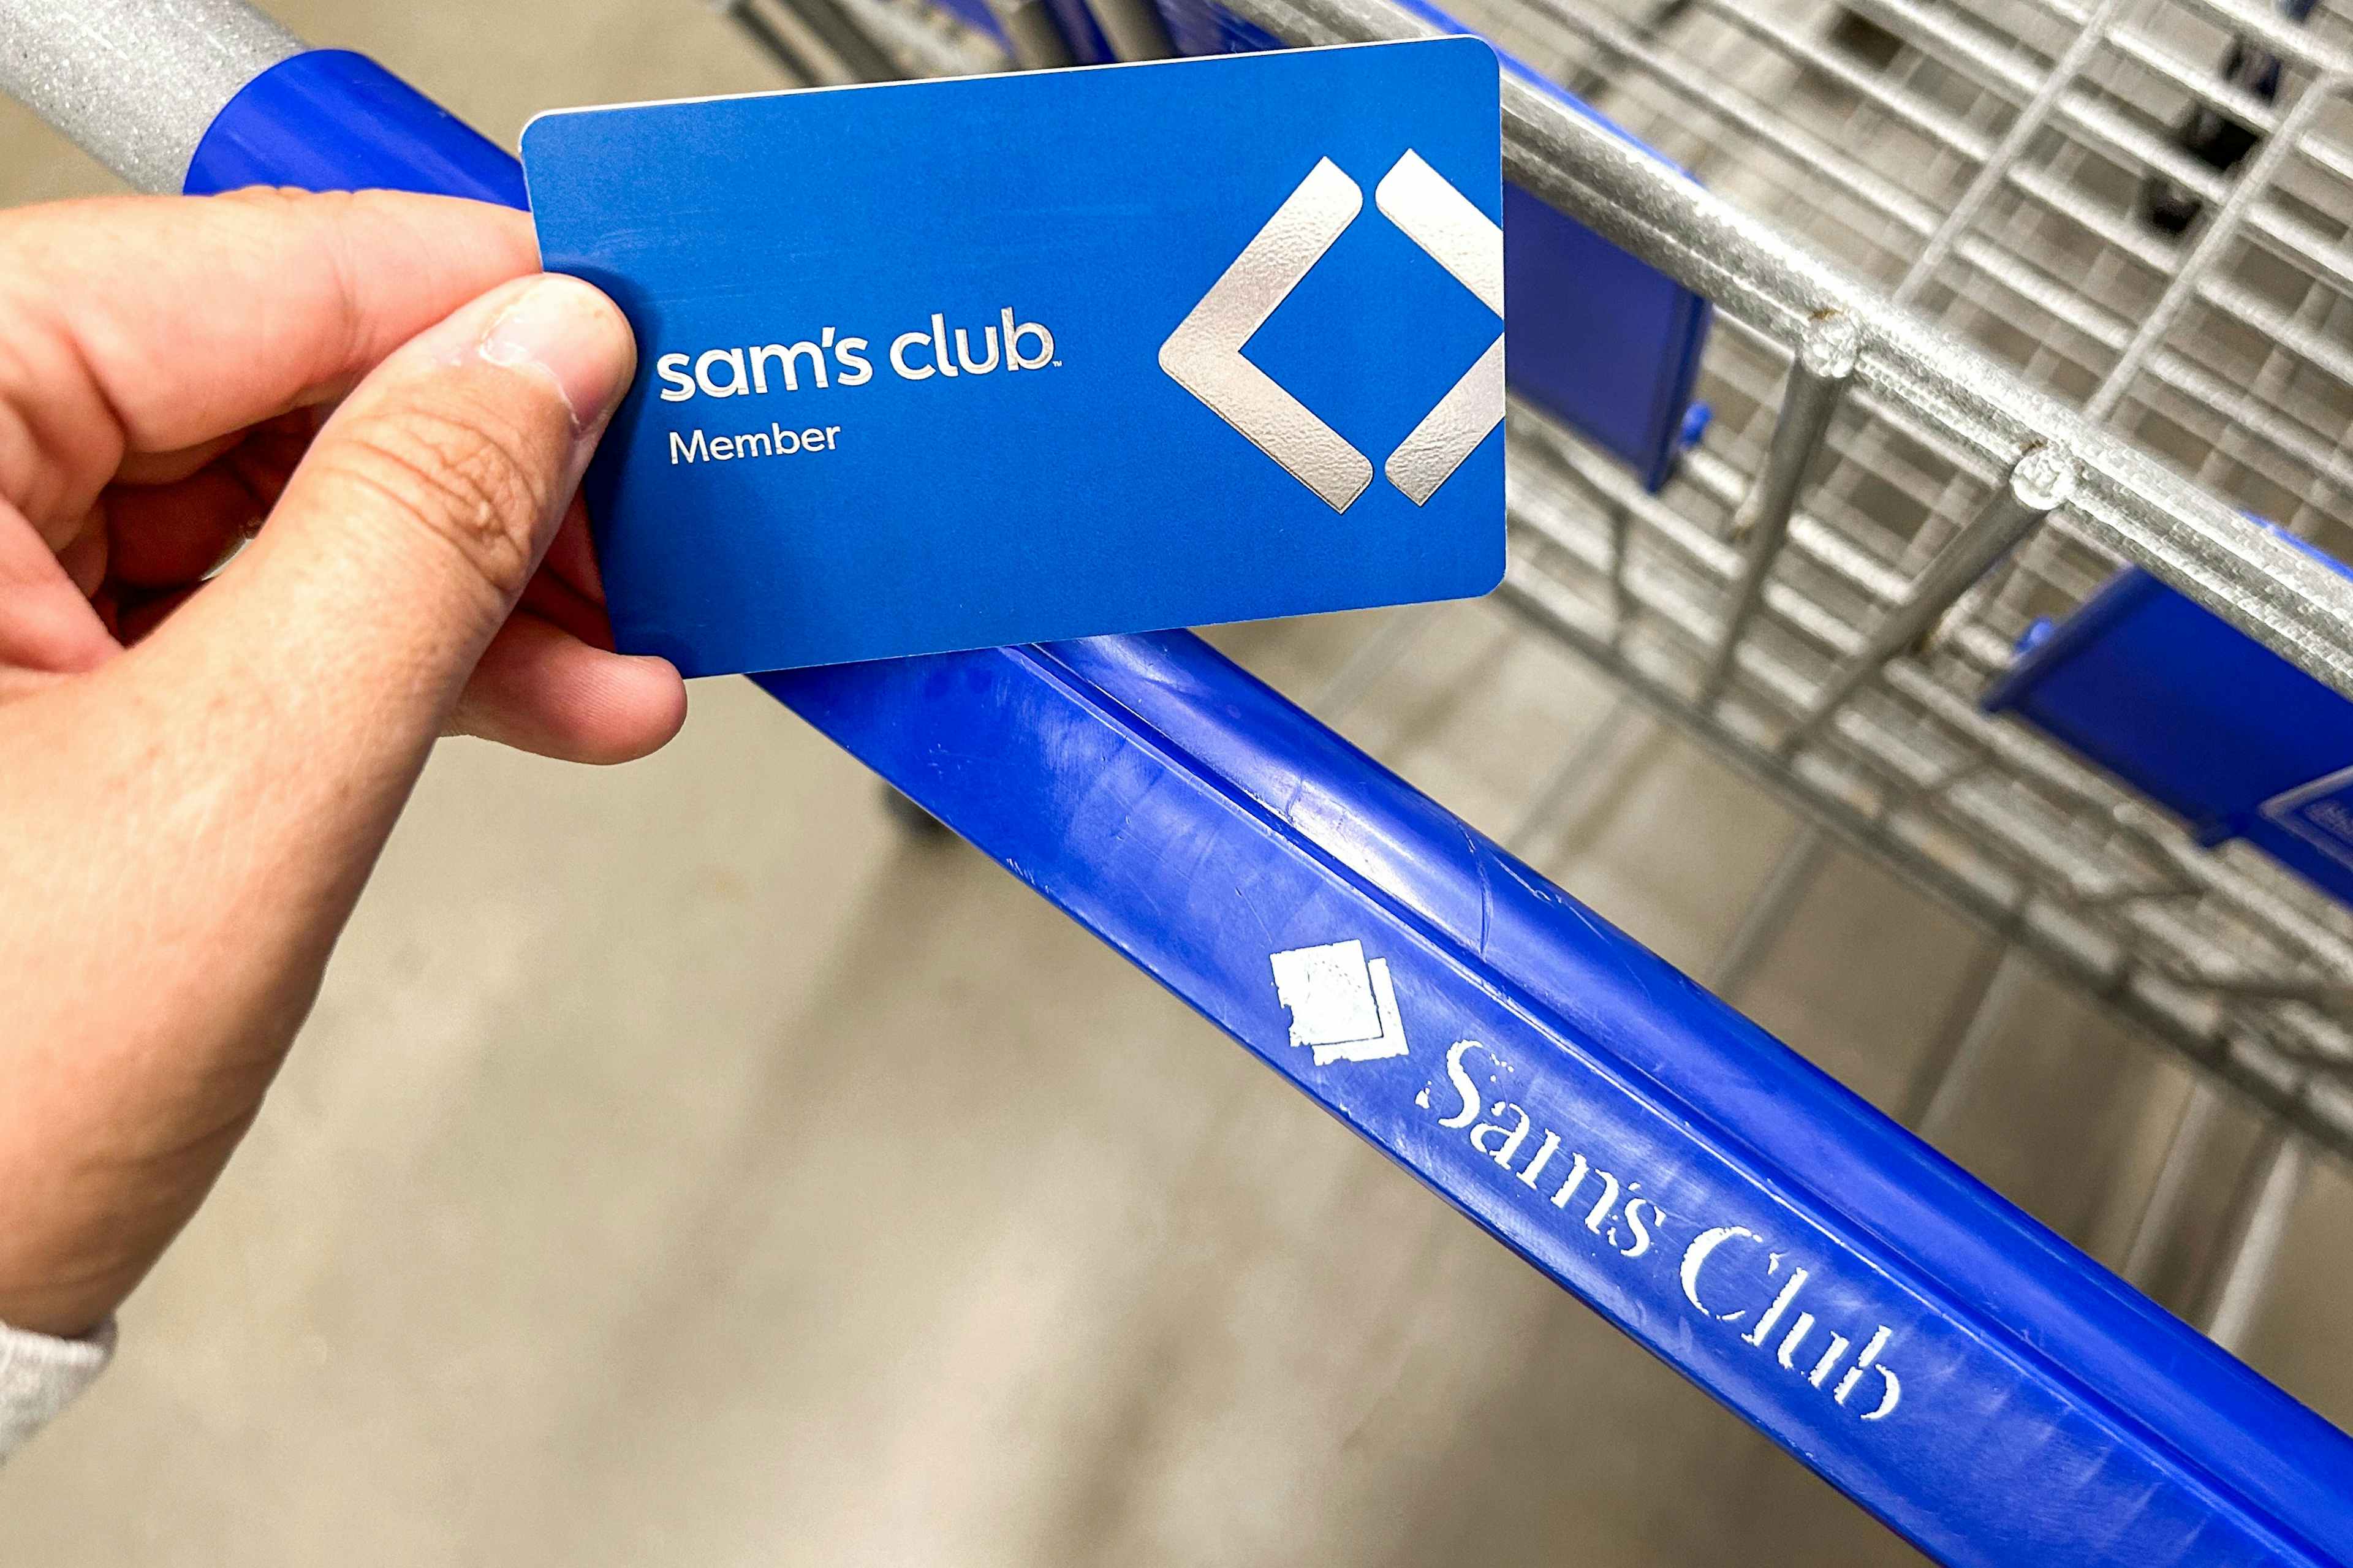 sams-club-member-card-kcl-6